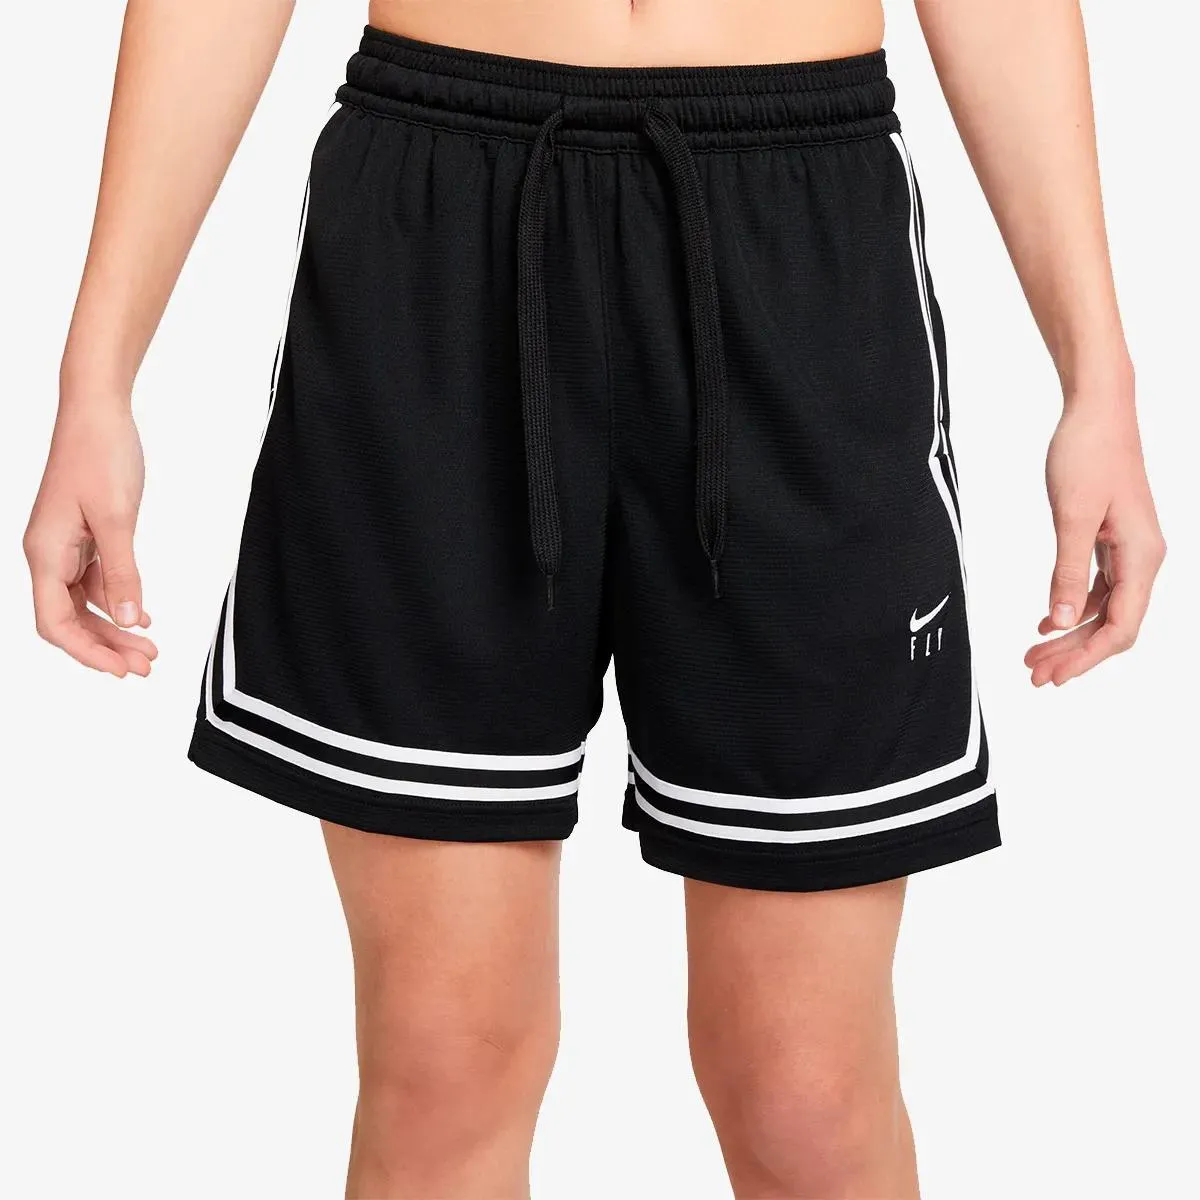 Nike Kratke hlače Fly Crossover 